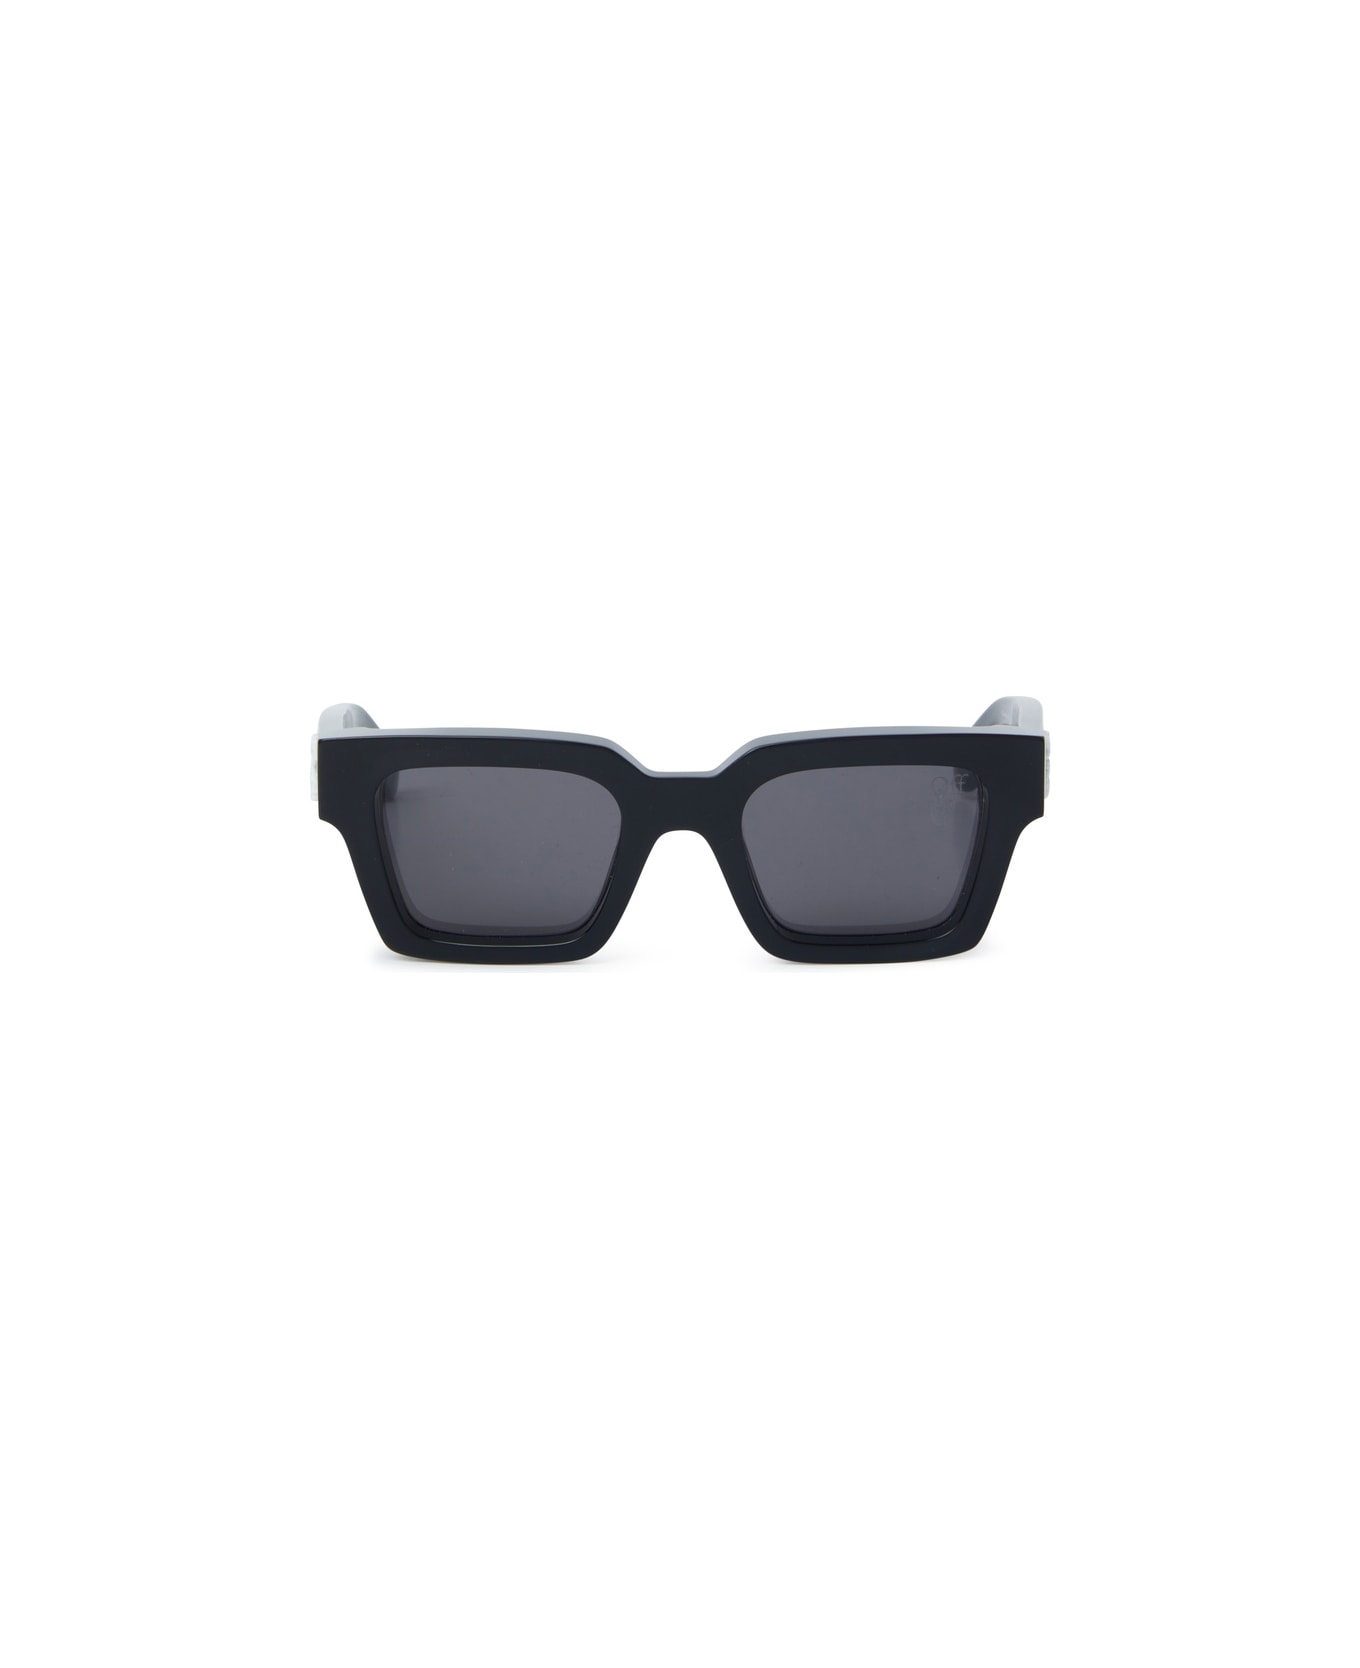 Off-White VIRGIL SUNGLASSES Sunglasses - Black Dark Grey サングラス